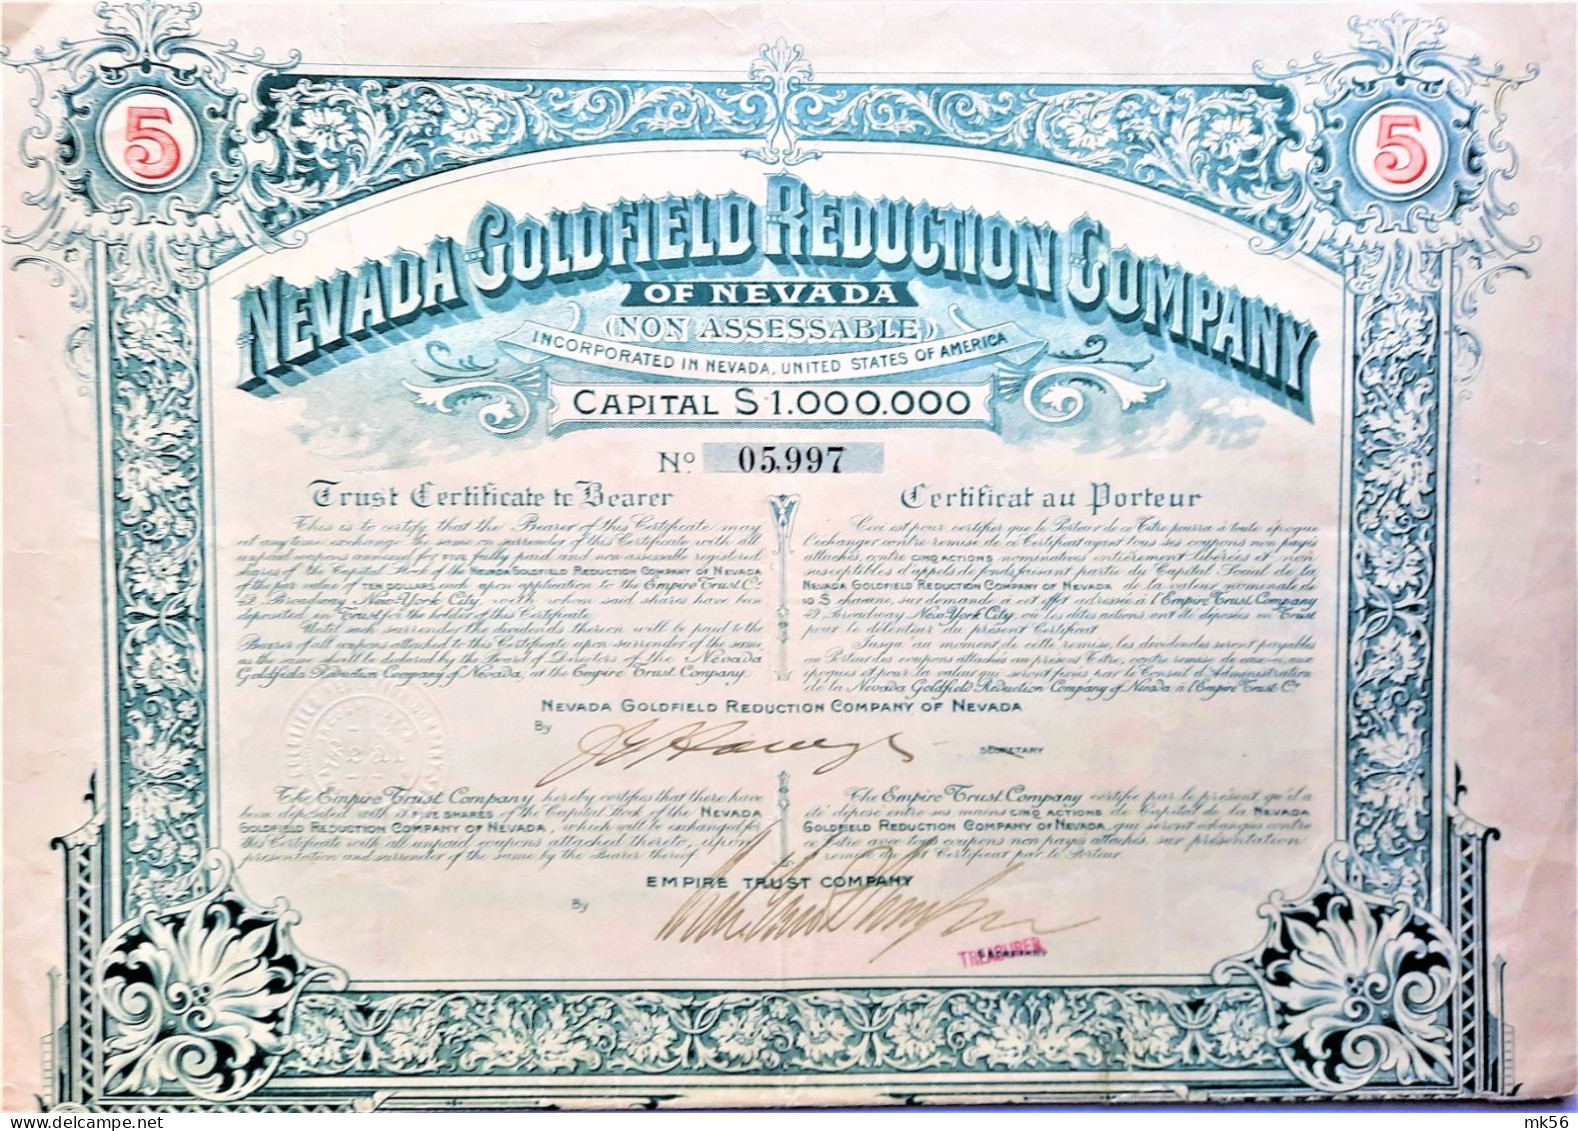 Nevada Goldfield Reduction Company (1910) - Bergbau